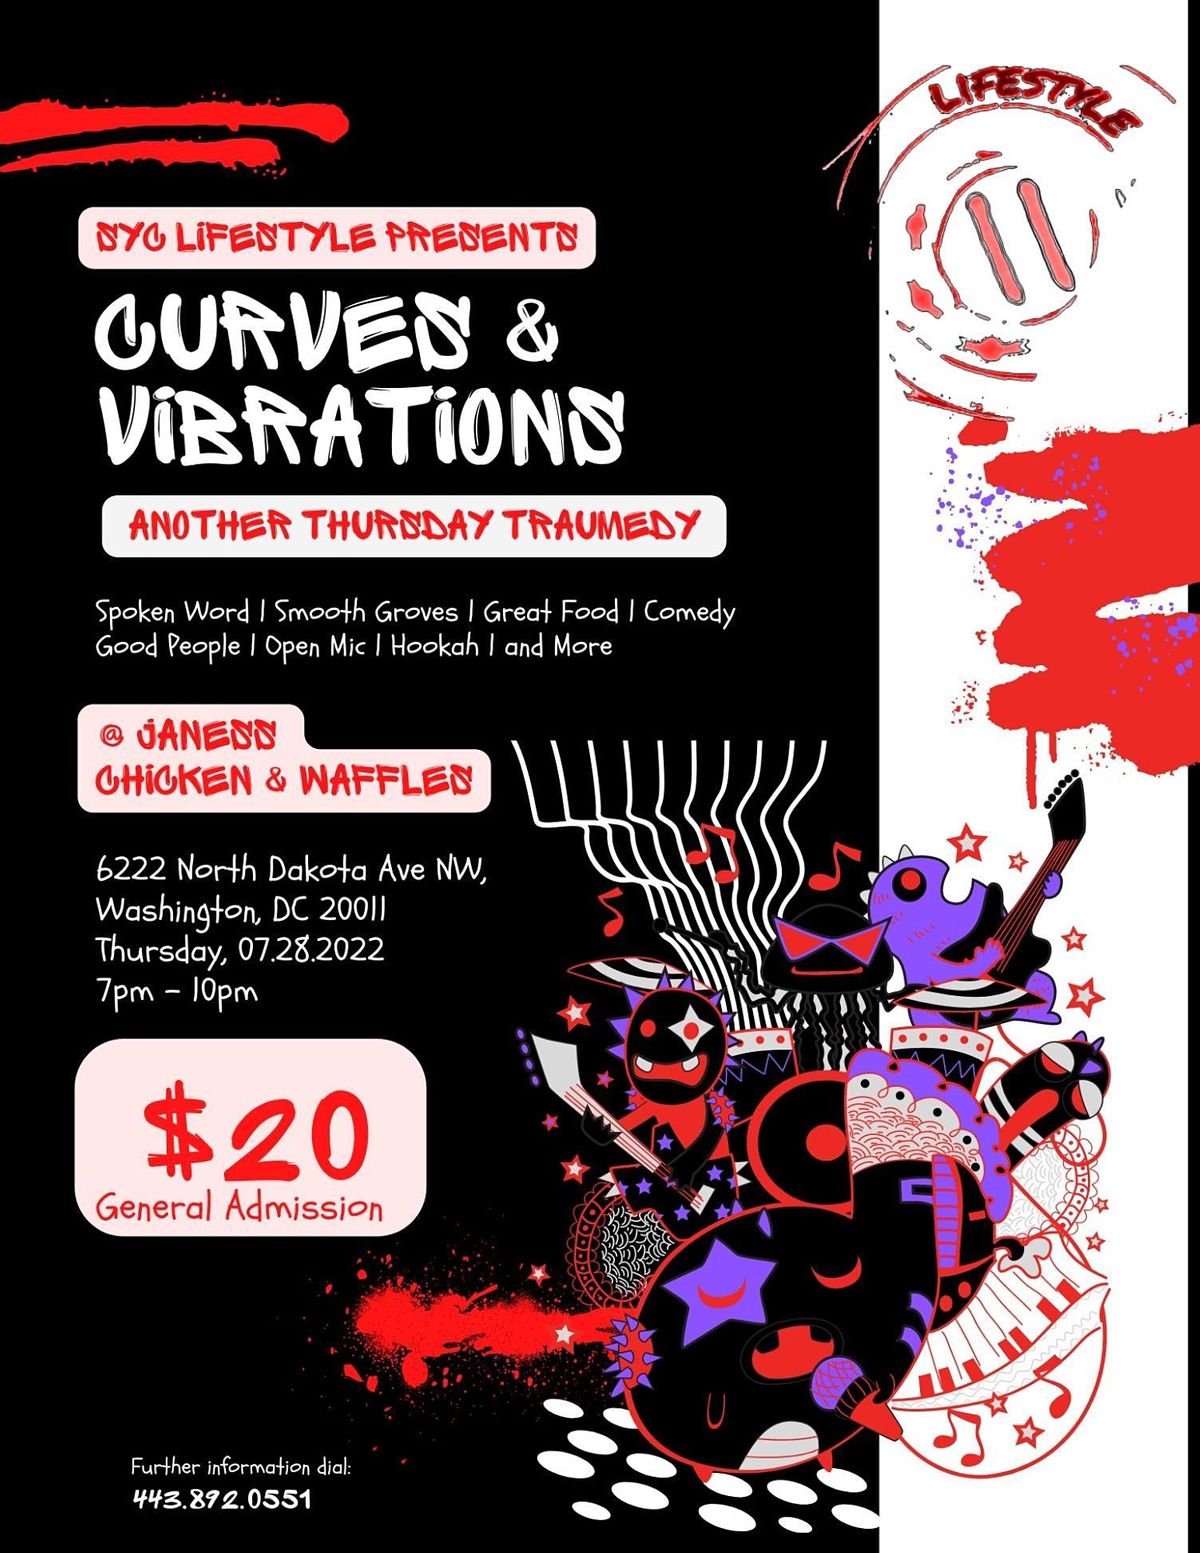 SYC Lifestyle Presents Curves & Vibrations